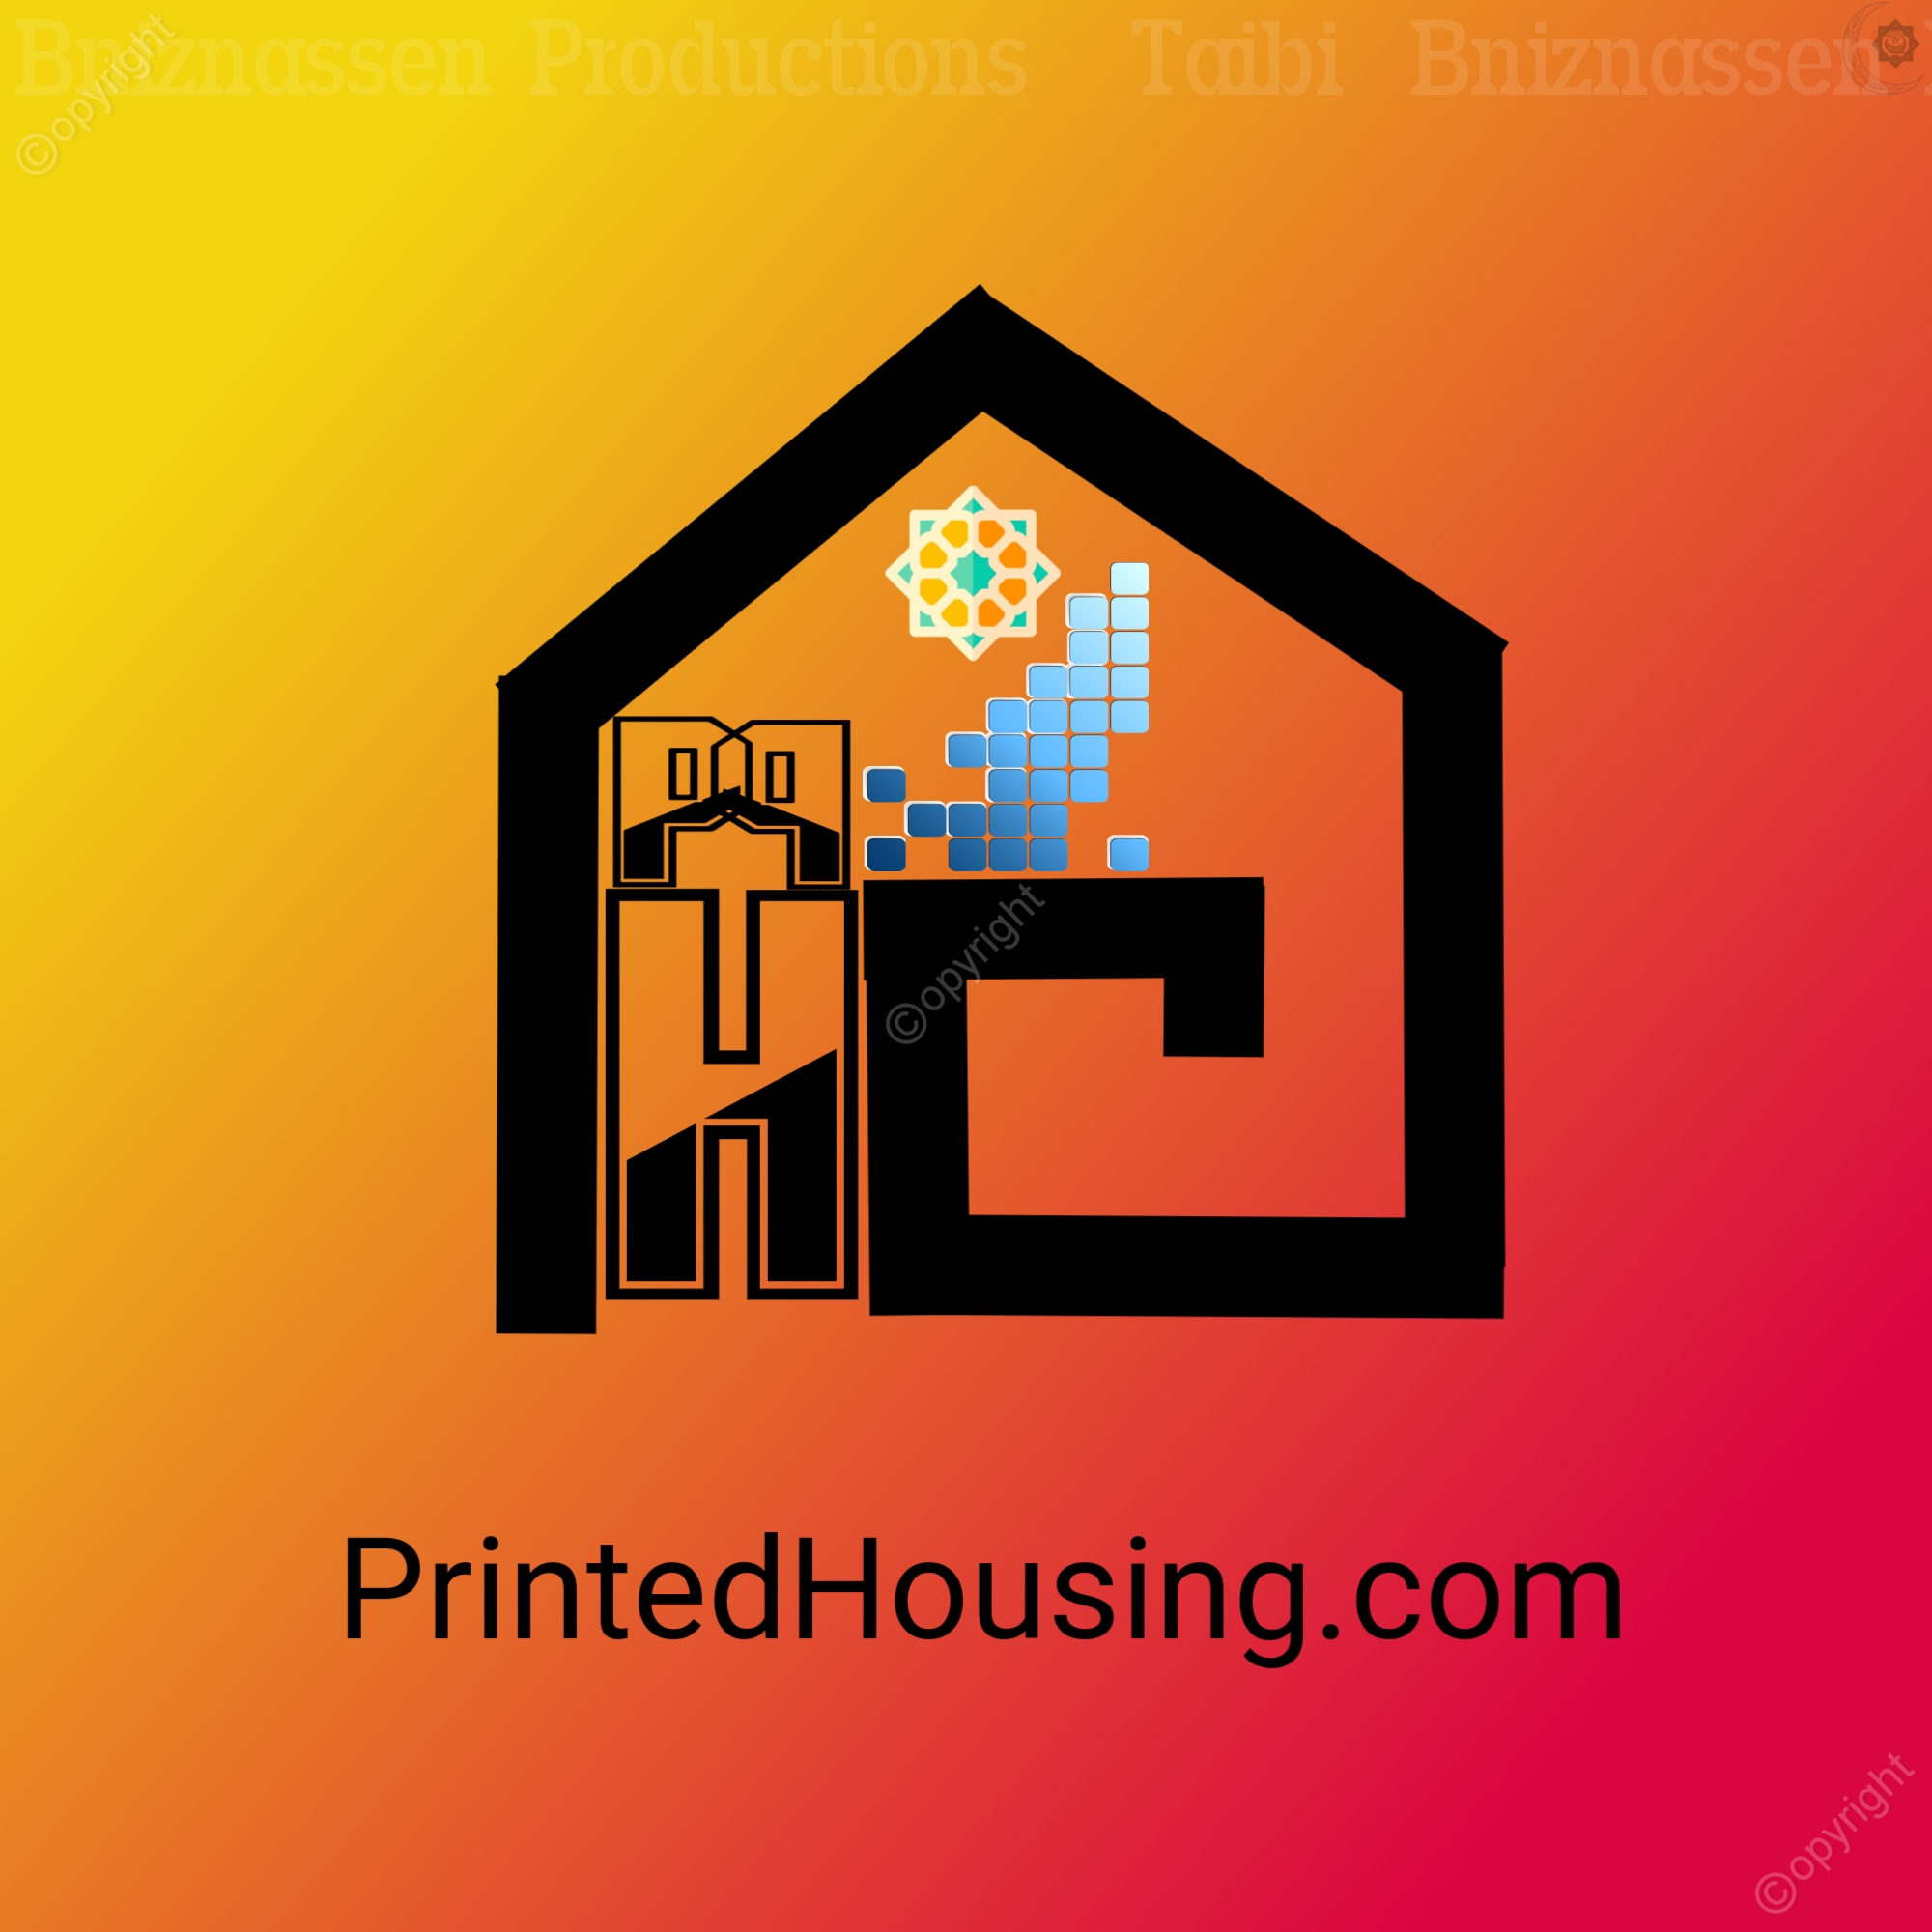 Printed Housing - (PrintedHousing    .com) Logo By Bniznassen Production.jpg